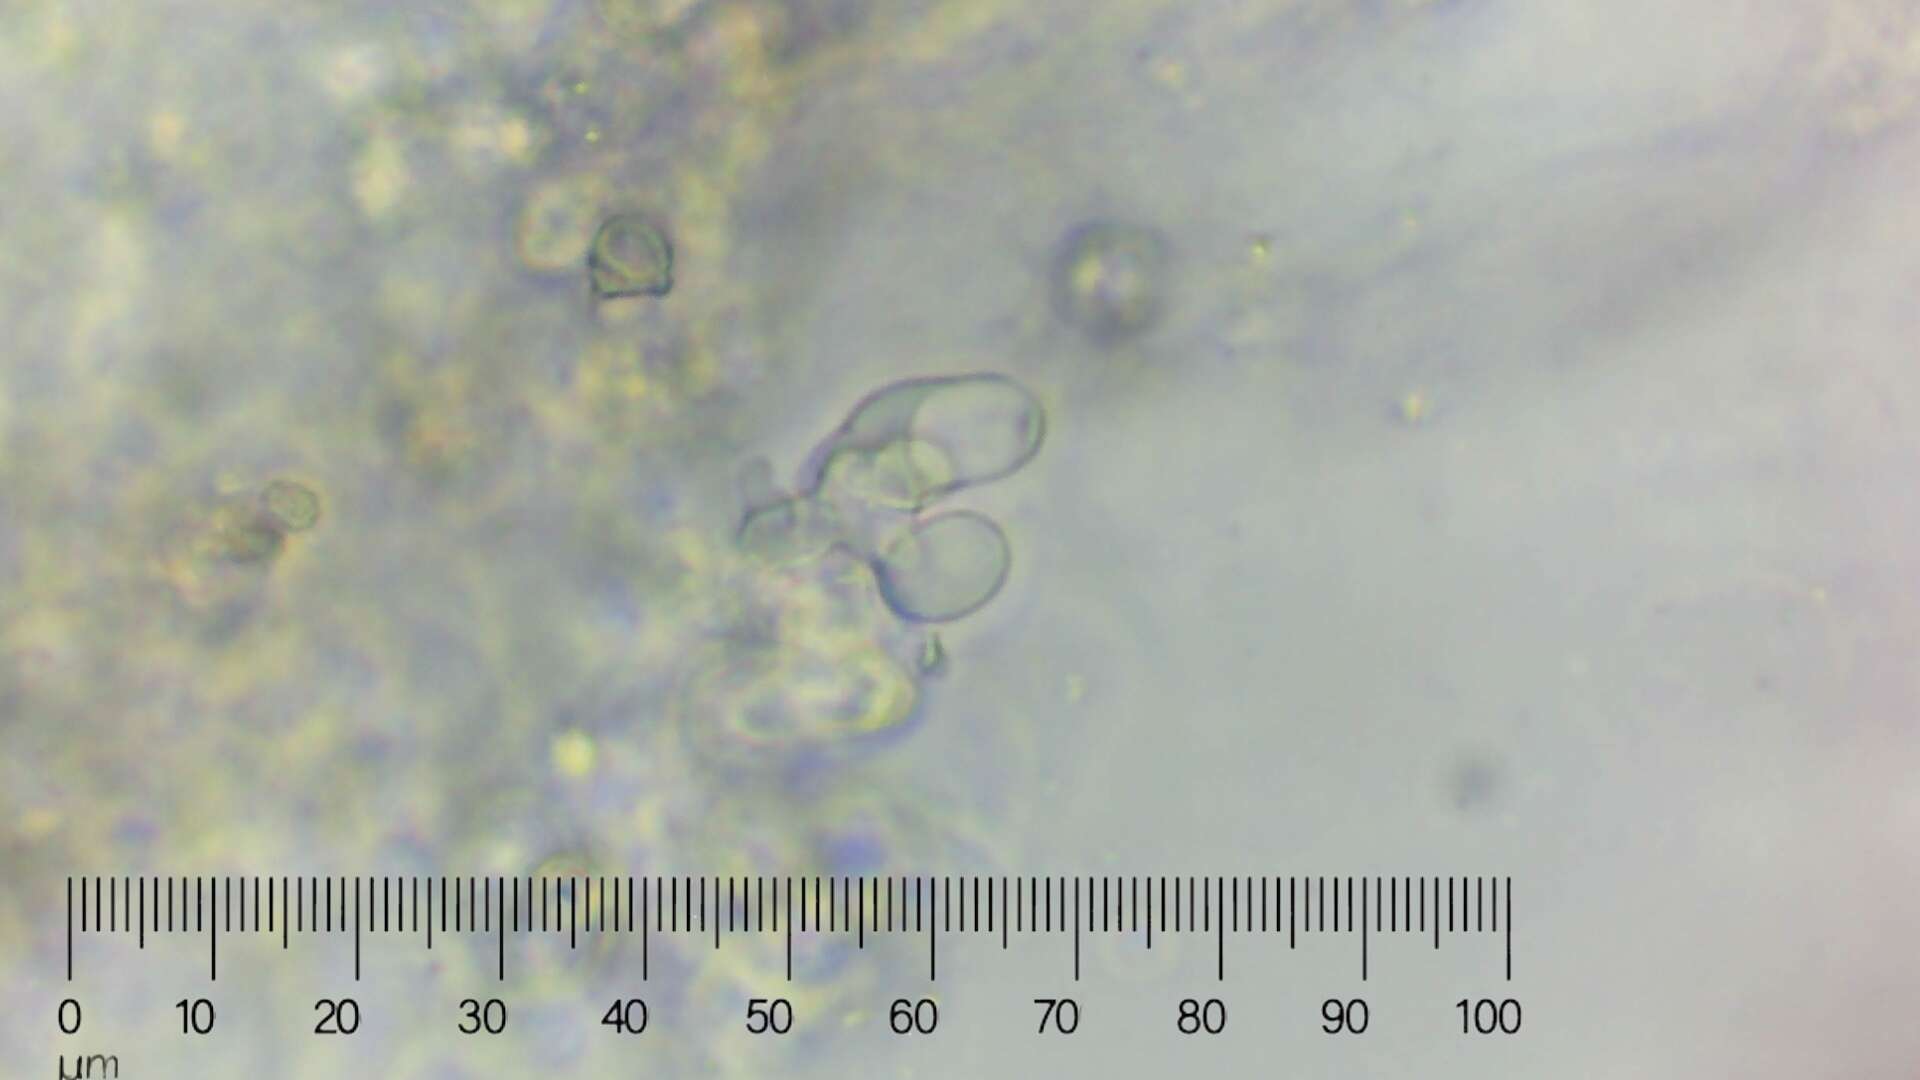 Image of Trechispora hymenocystis (Berk. & Broome) K. H. Larss. 1994